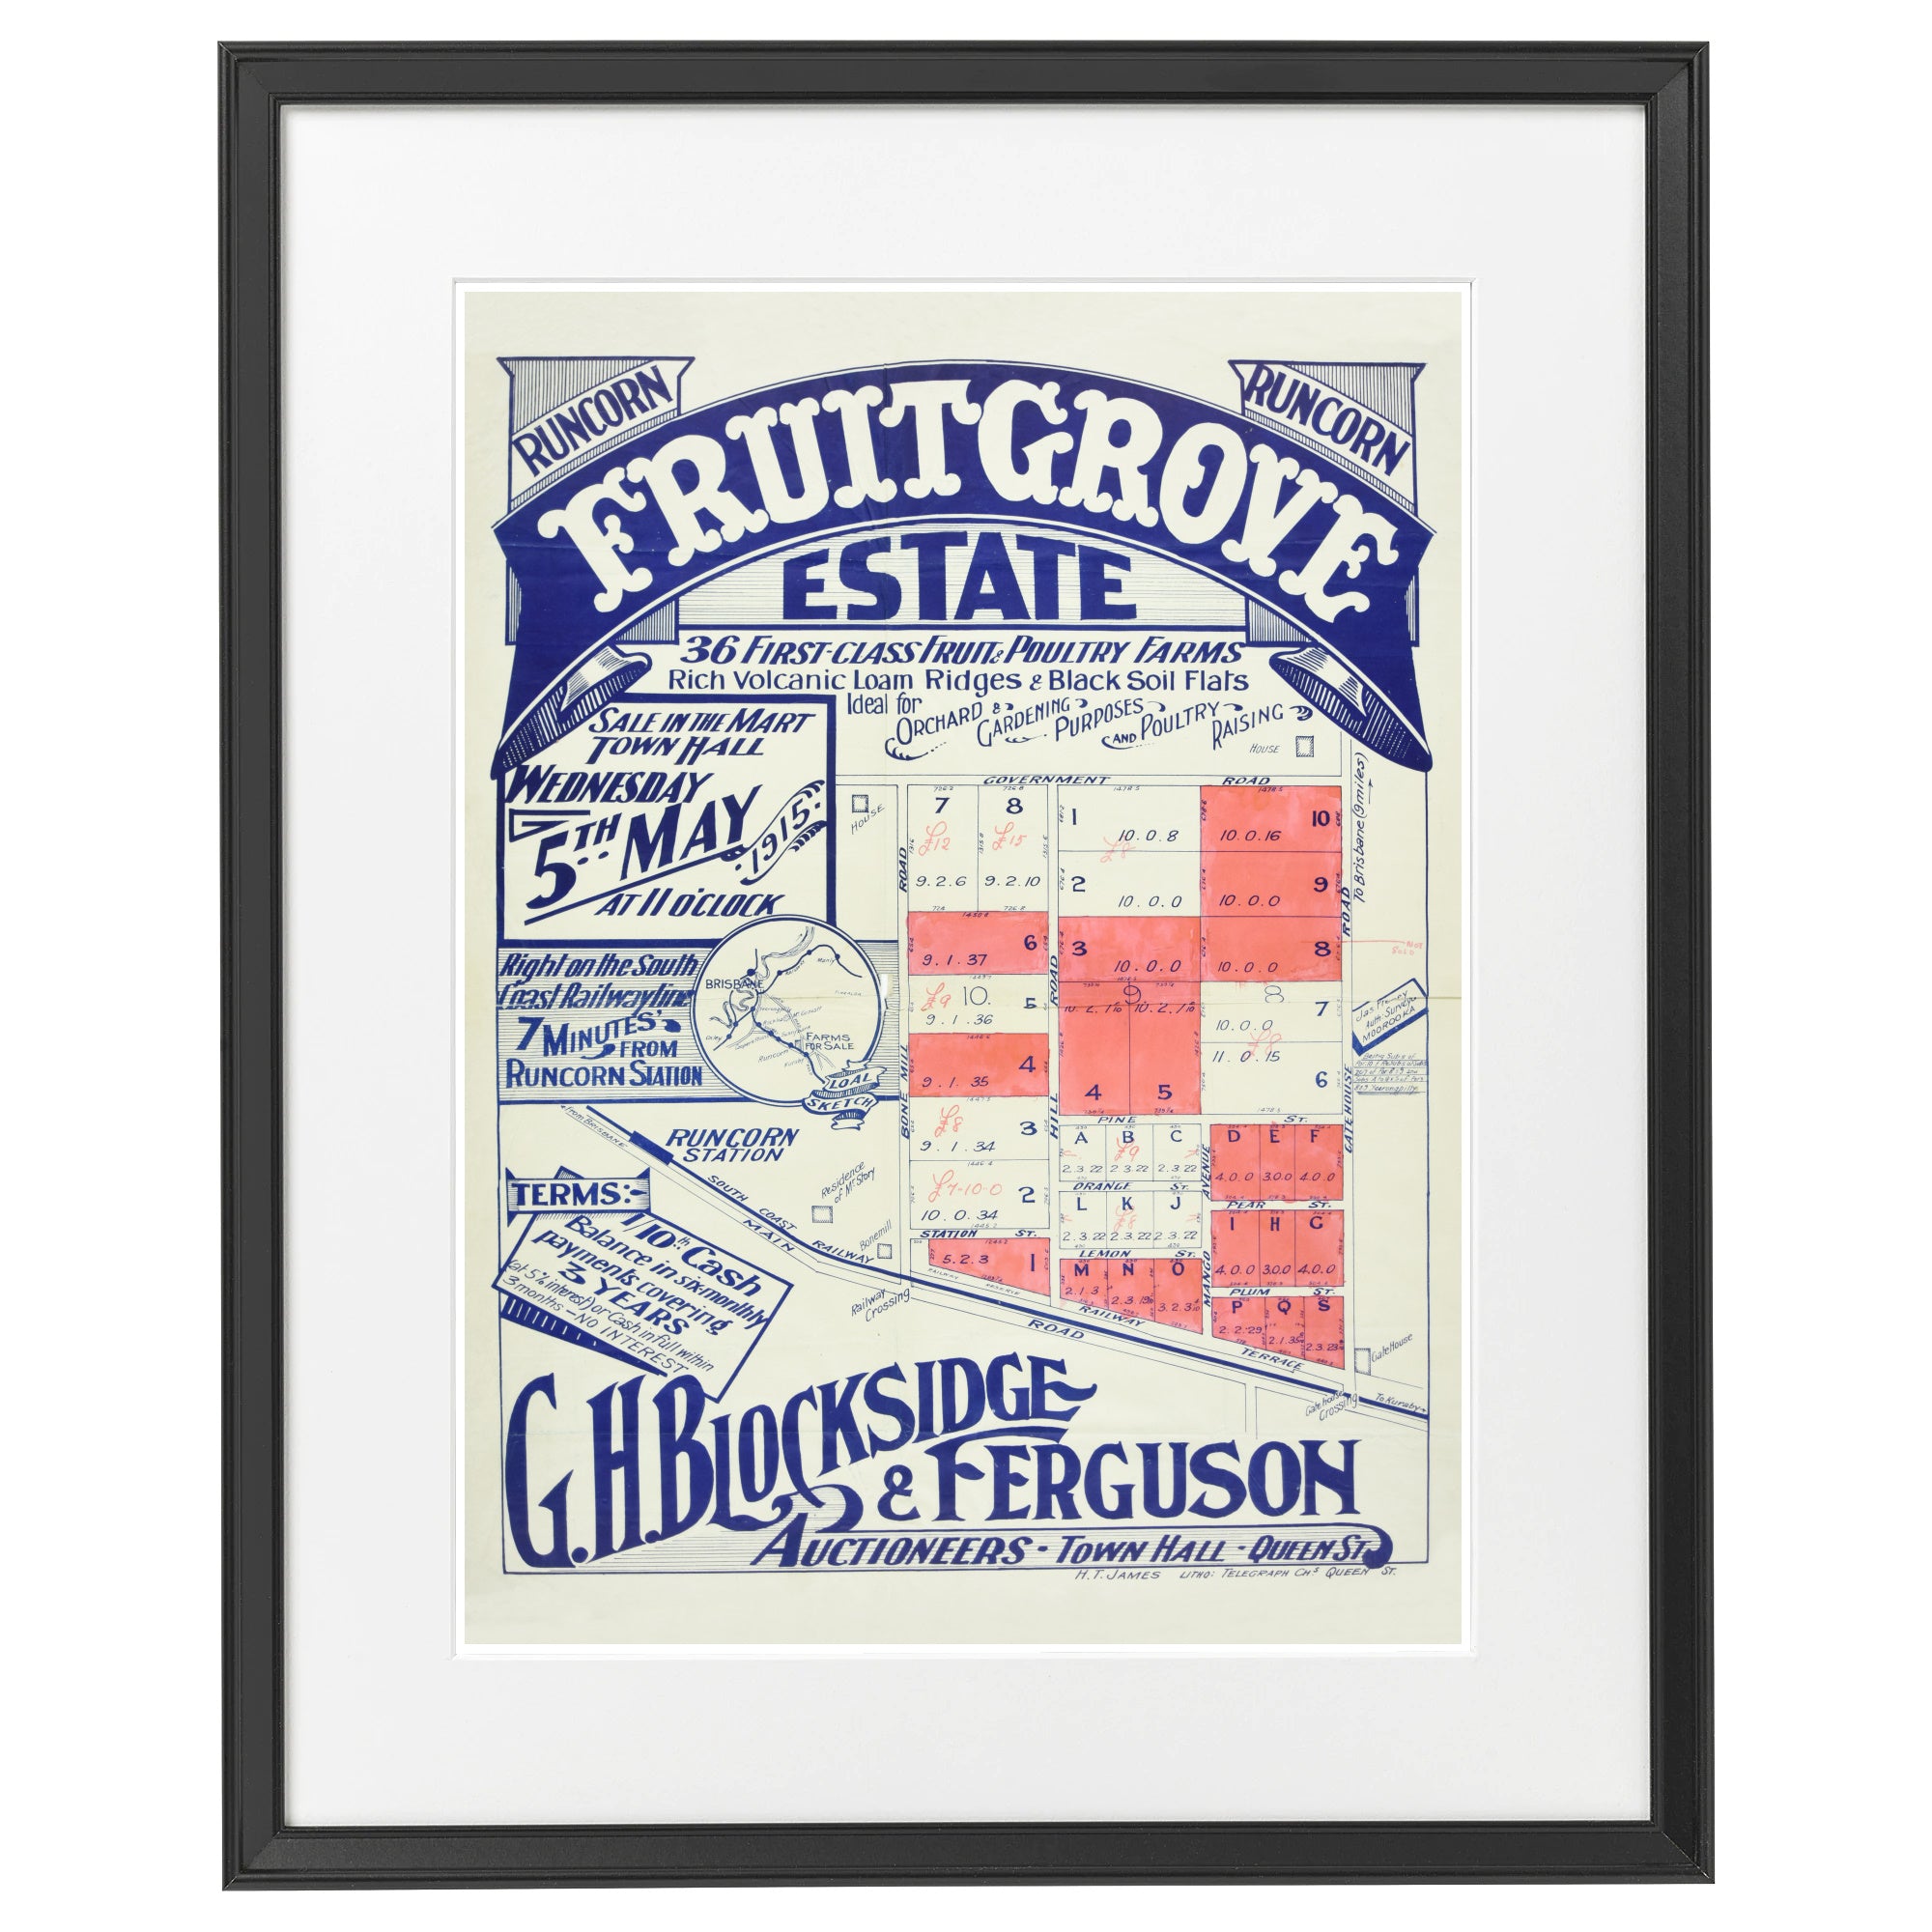 1915 Runcorn - Fruitgrove Estate - 109 years old today